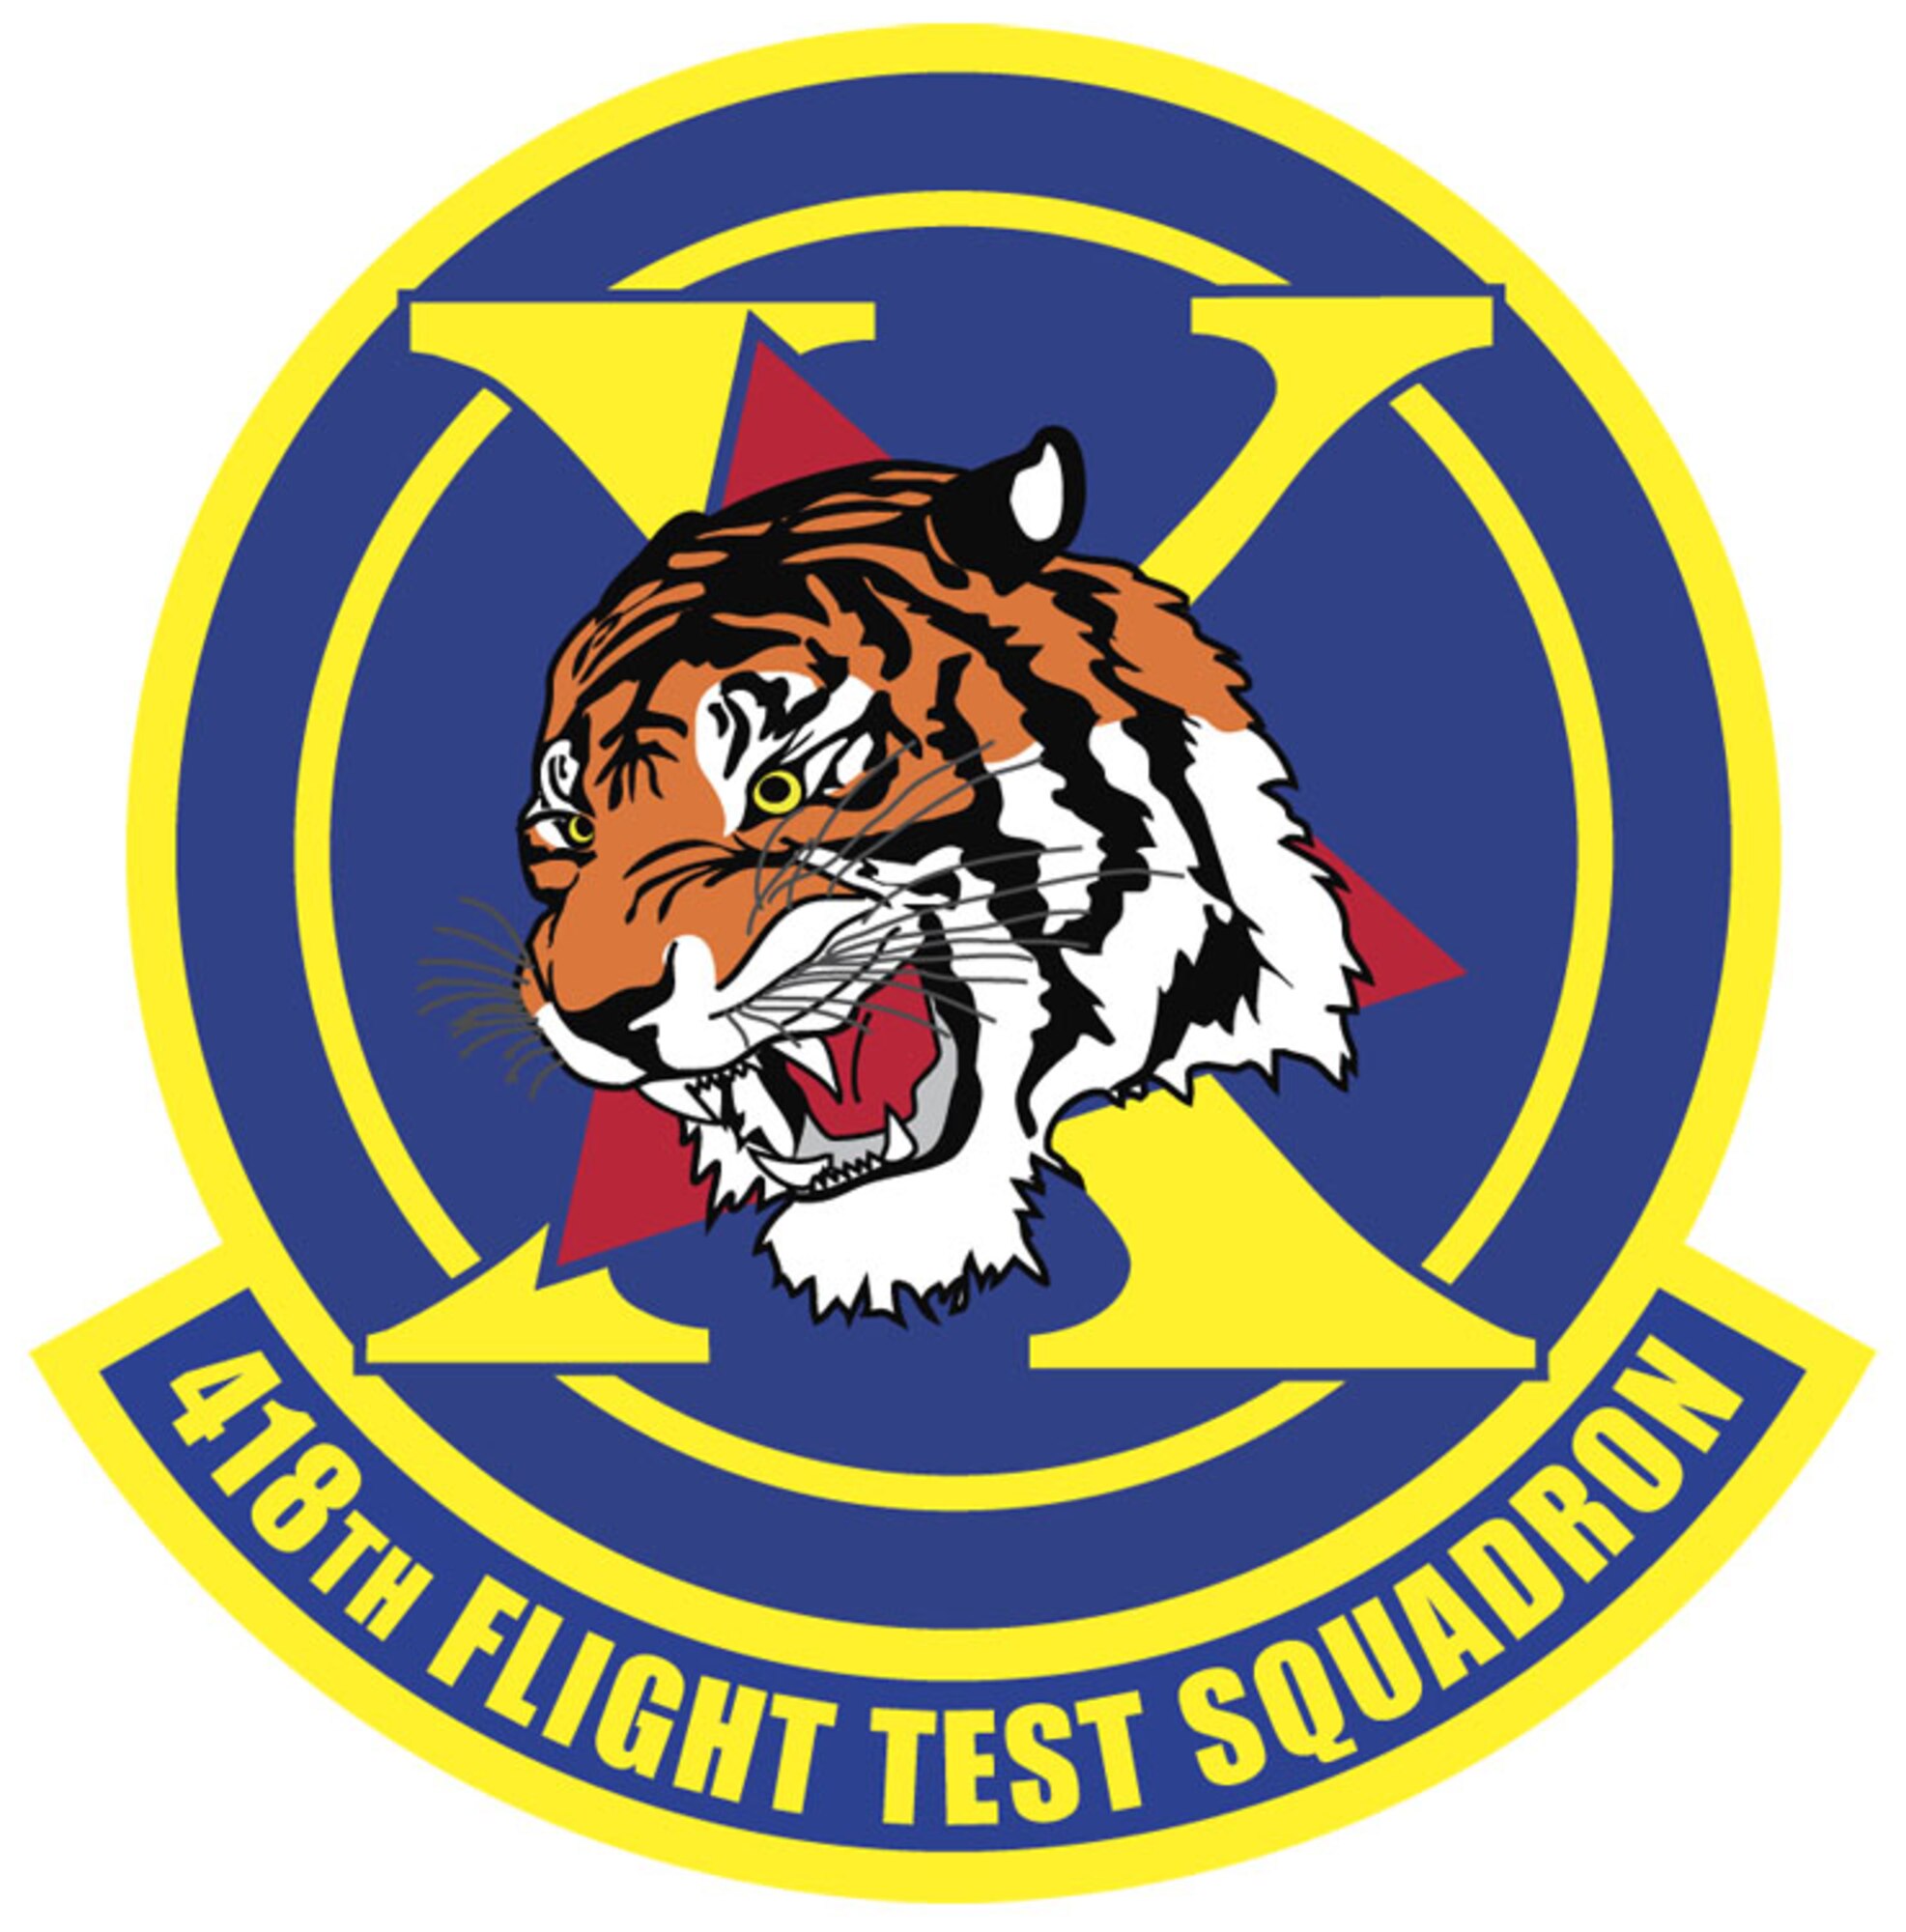 418th Flight Test Squadron patch